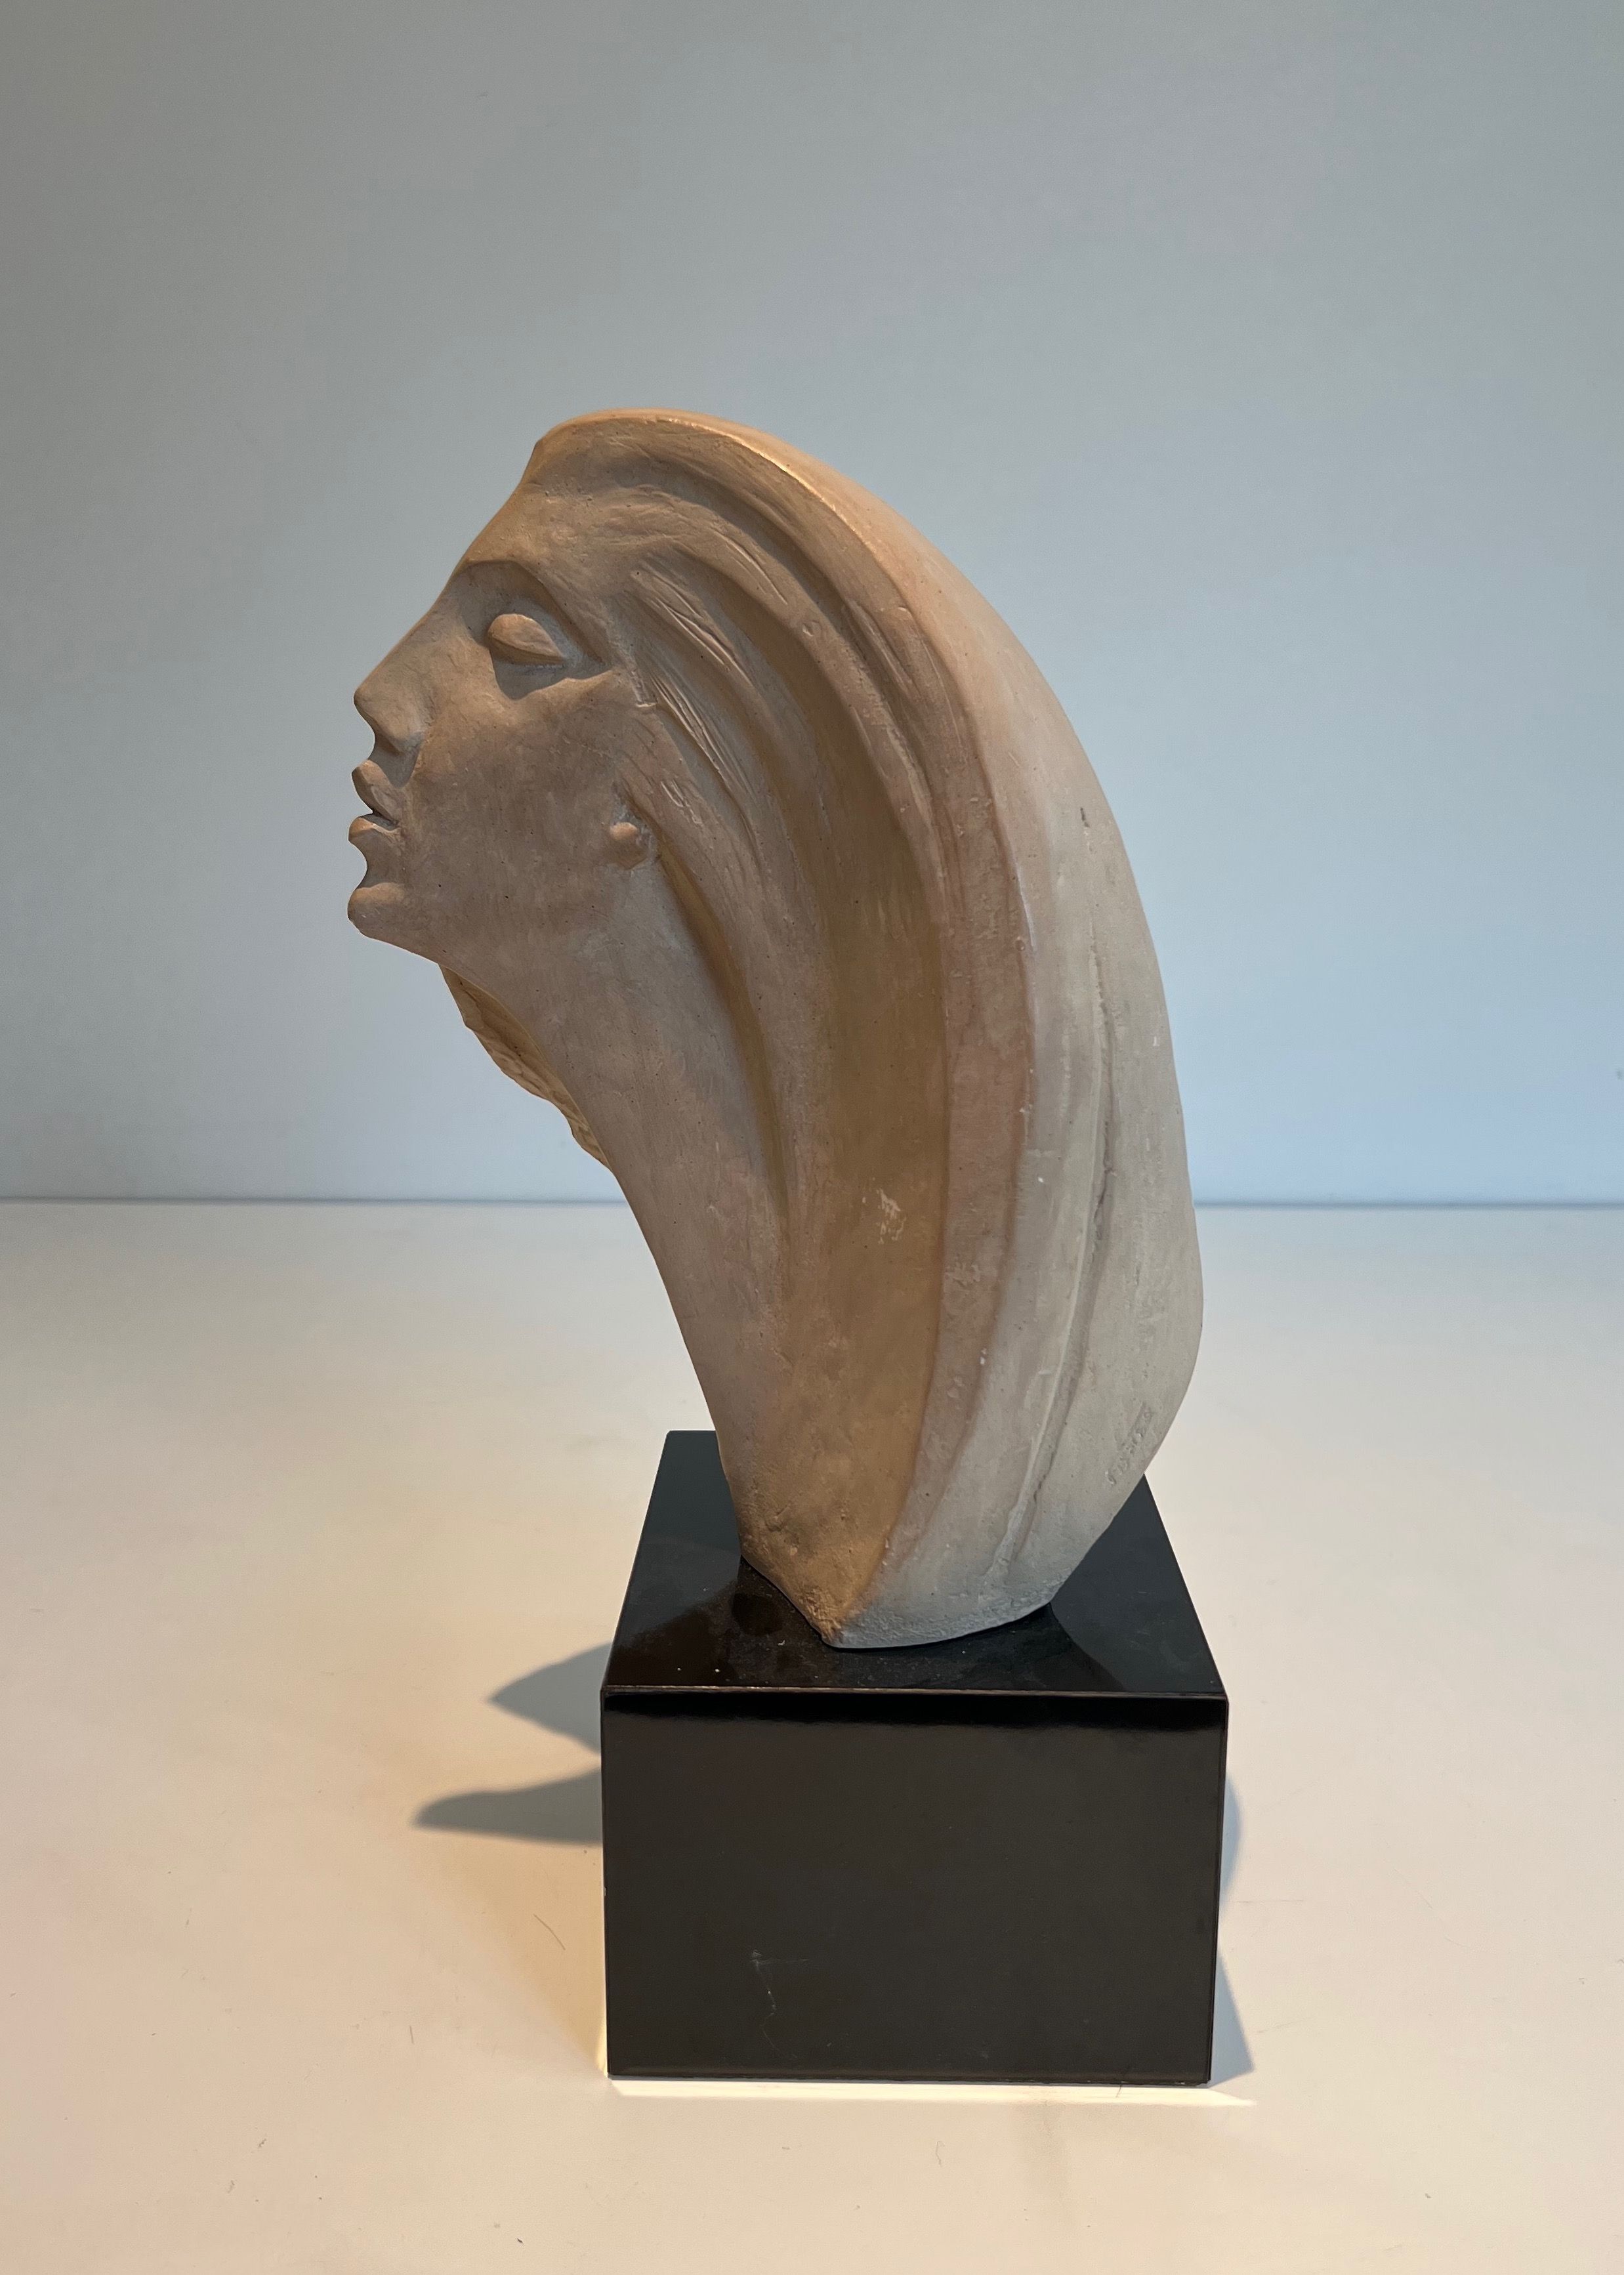 Terracotta Sculpture Representing a Woman's Face